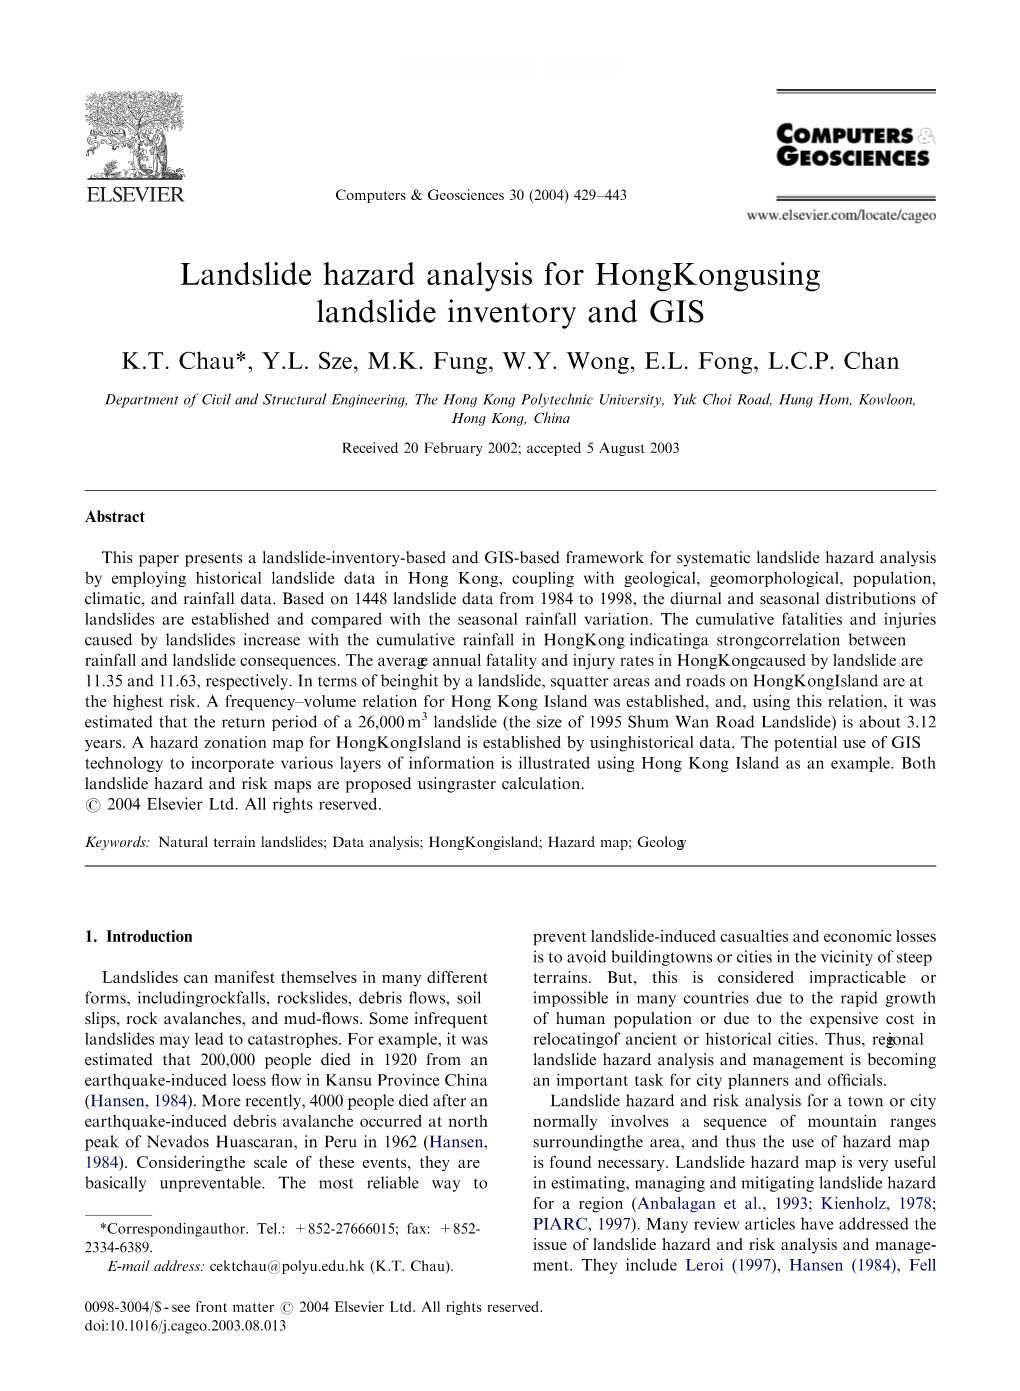 Landslide Hazard Analysis for Hong Kong Using Landslide Inventory And